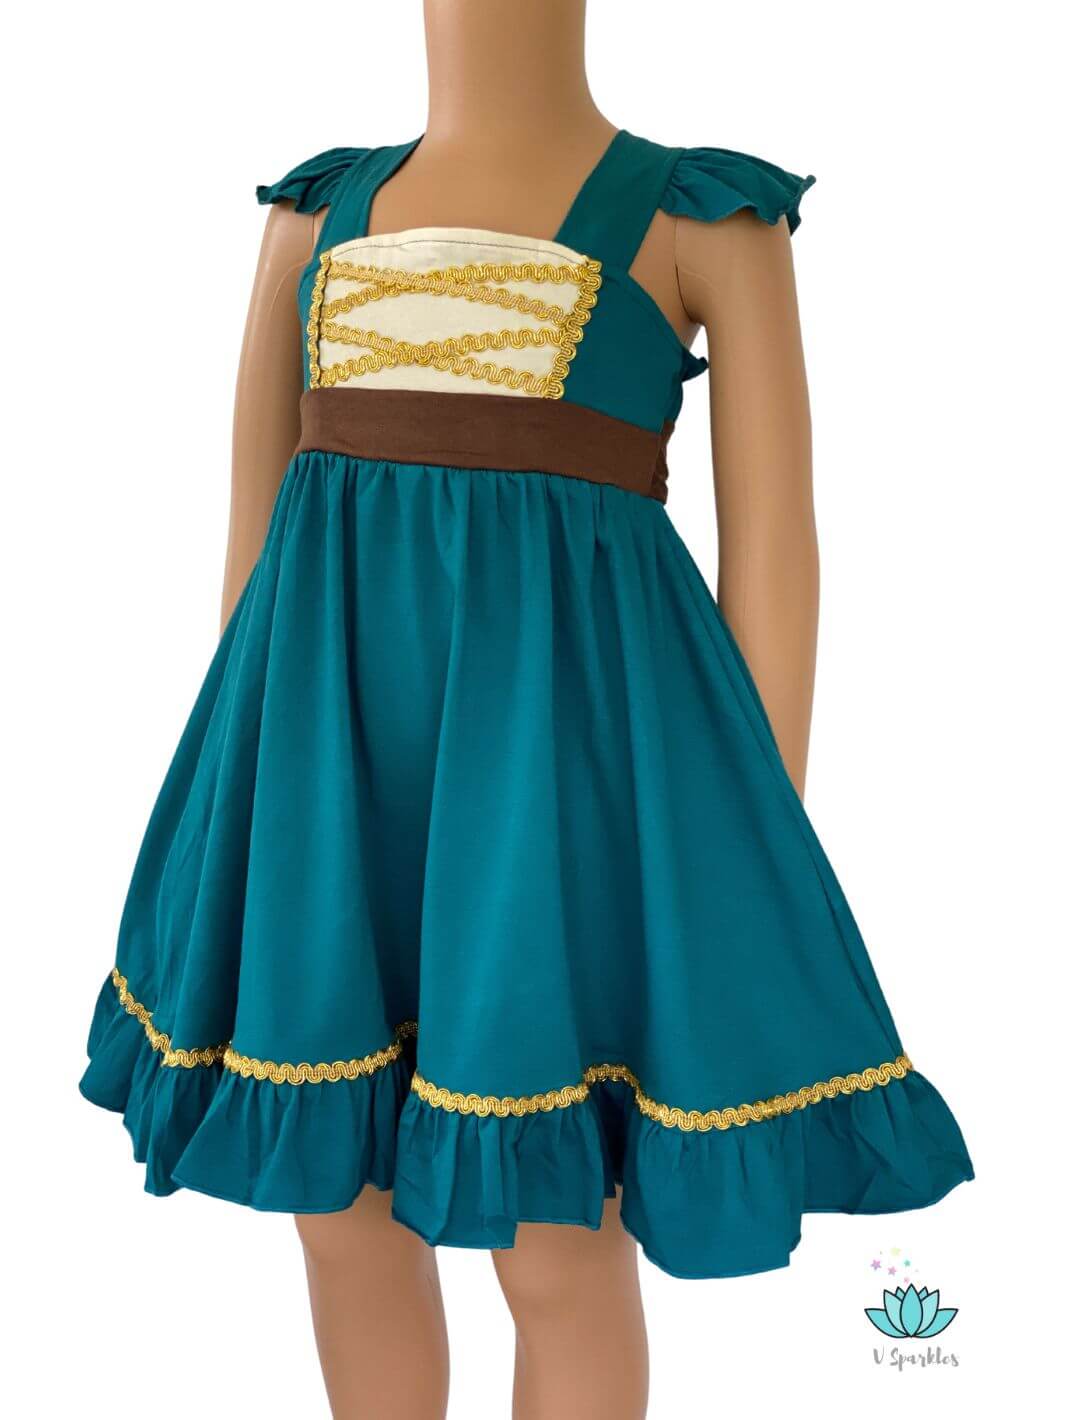 twirl princess dress for kids, princess dress for girls, merida dress, disney outfit